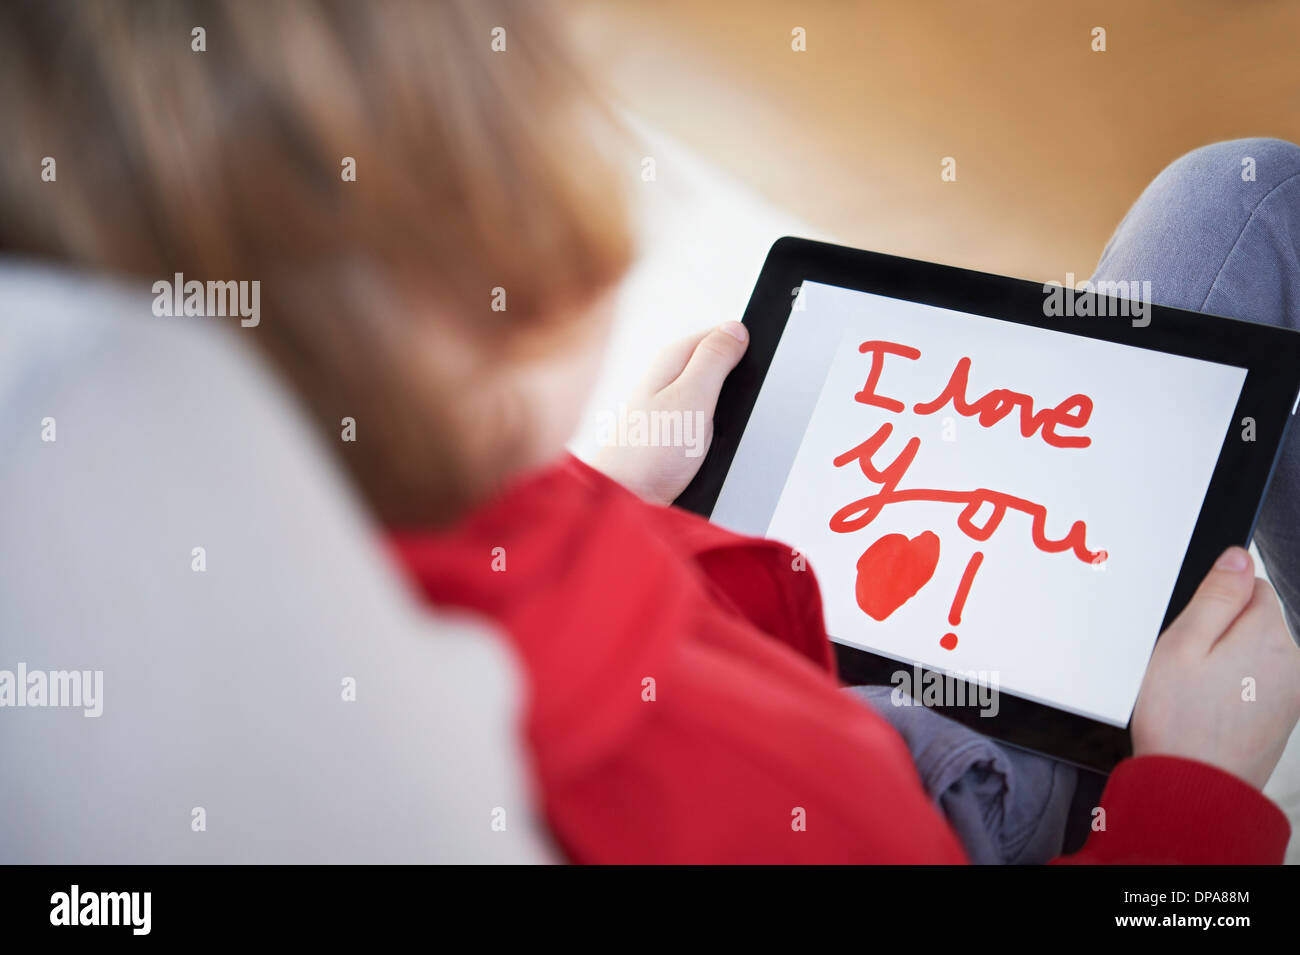 Vista trasera del niño sosteniendo tablet diciendo "I love you" Foto de stock